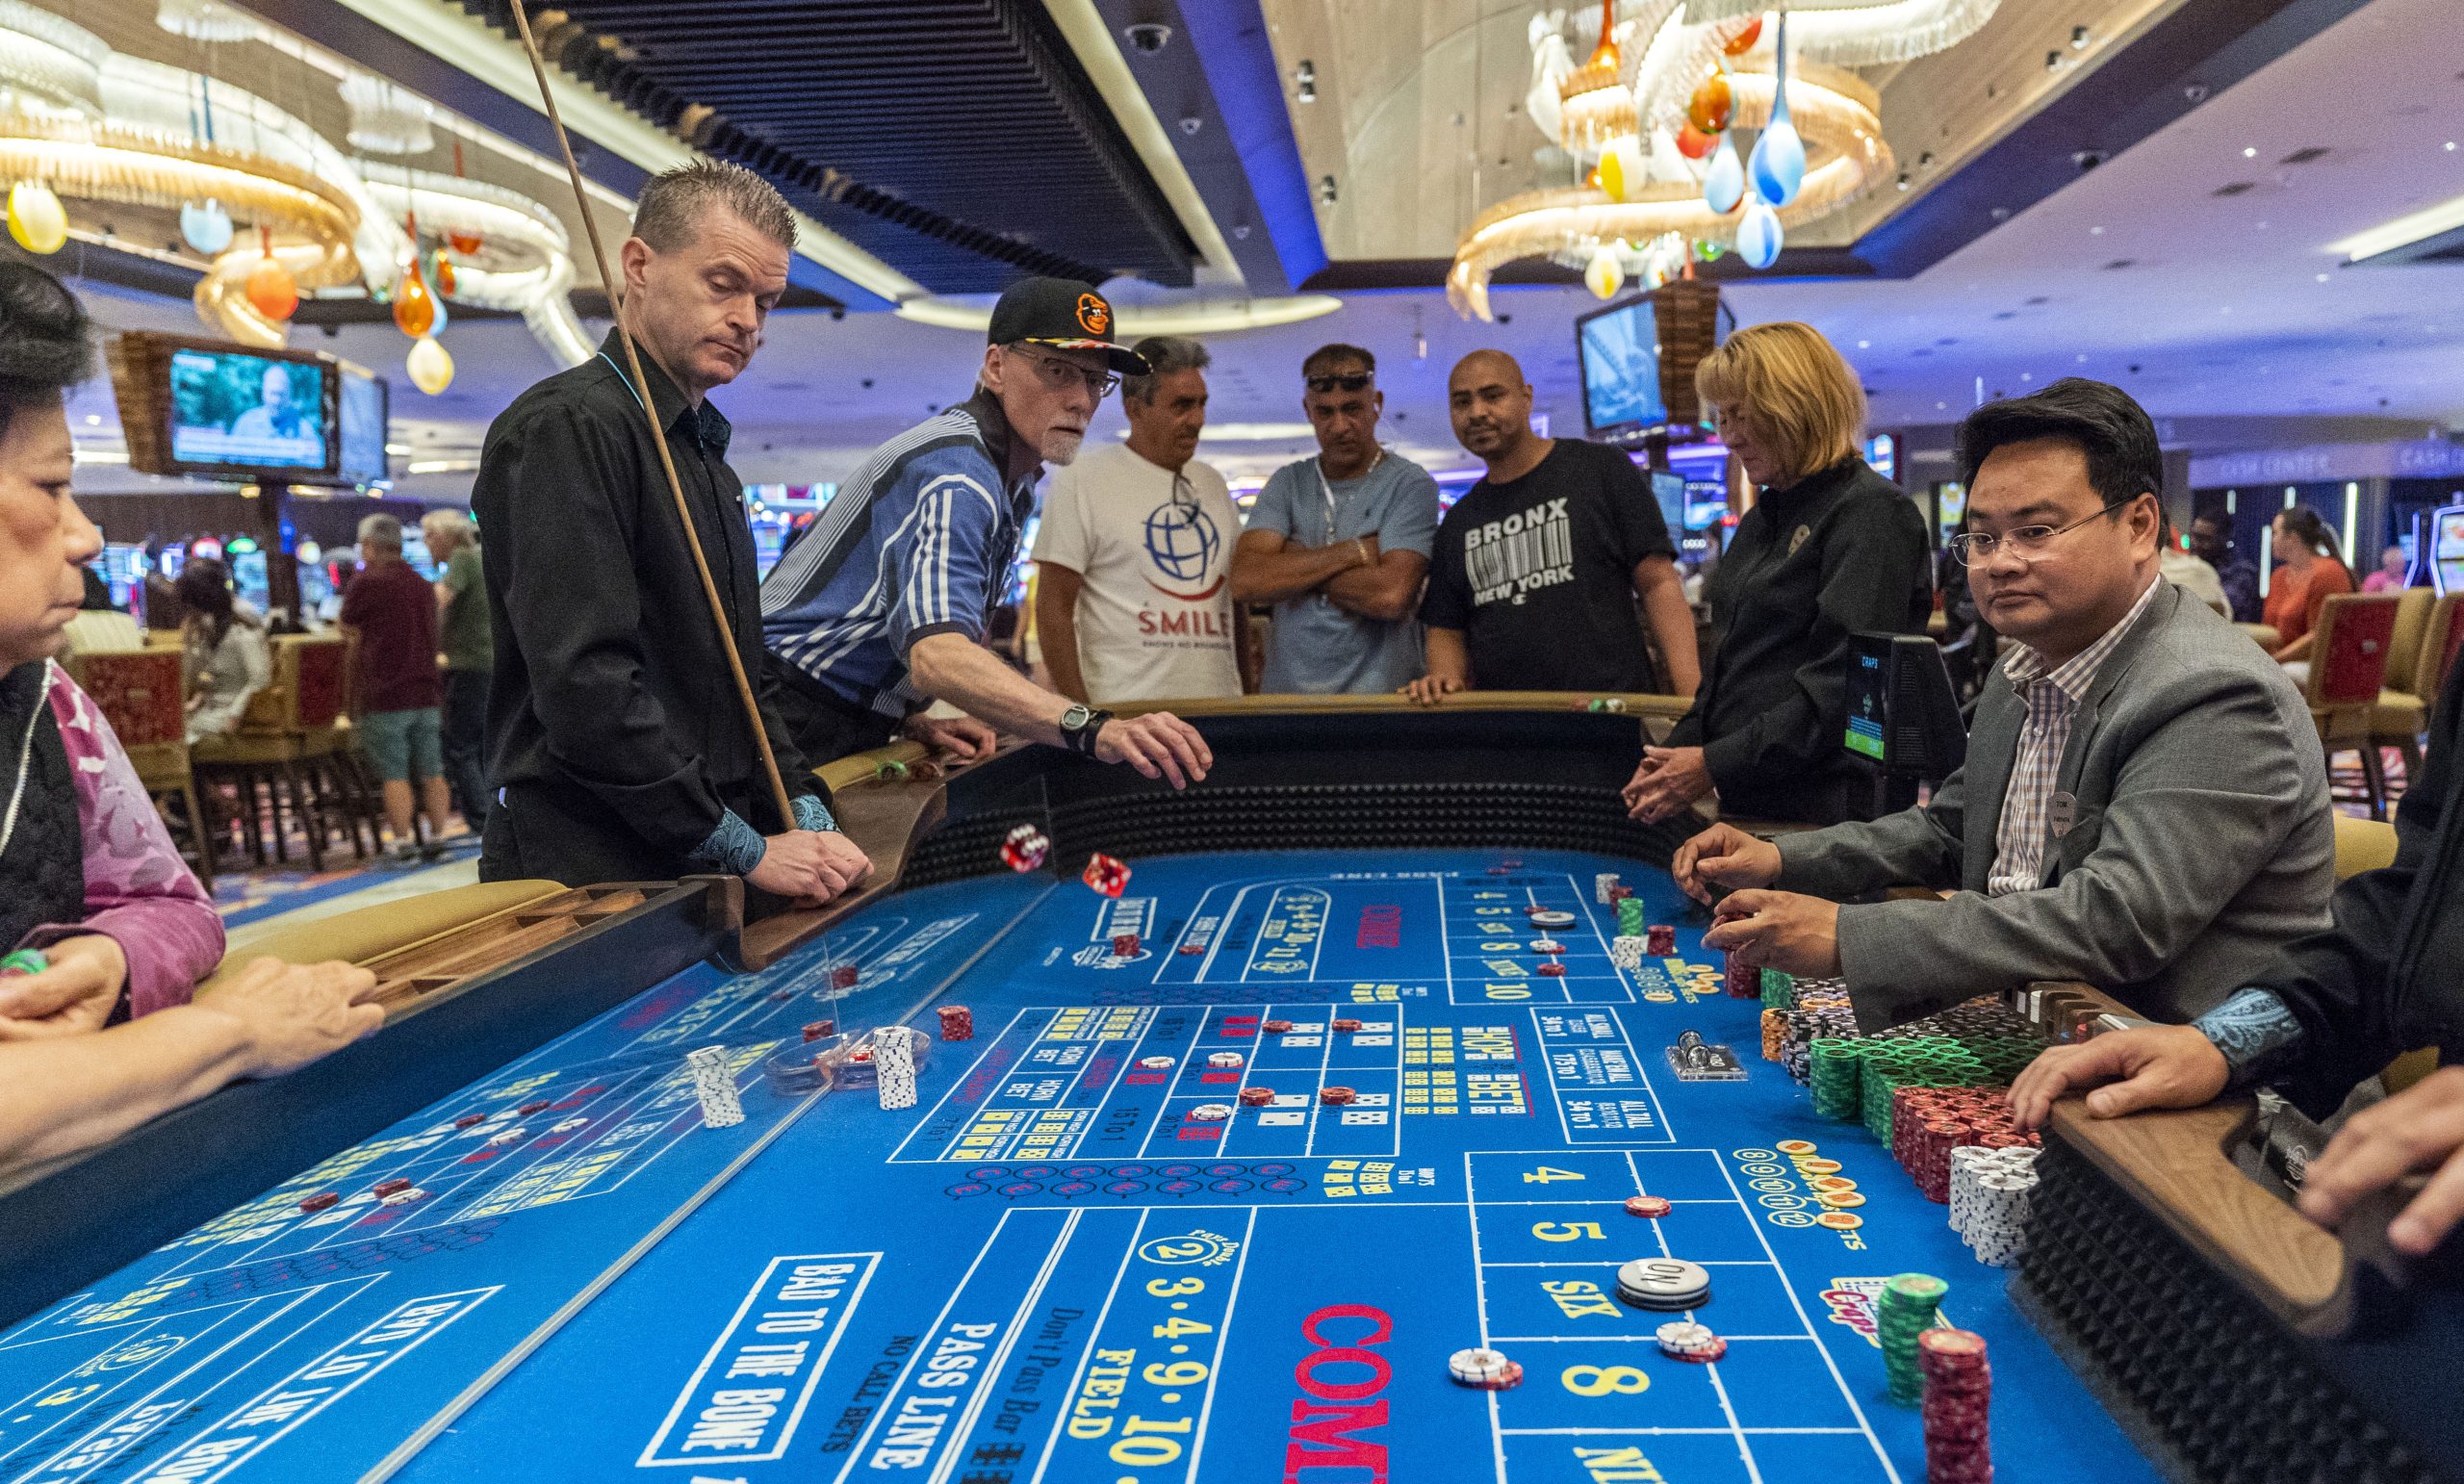 Does gambling make you poor?